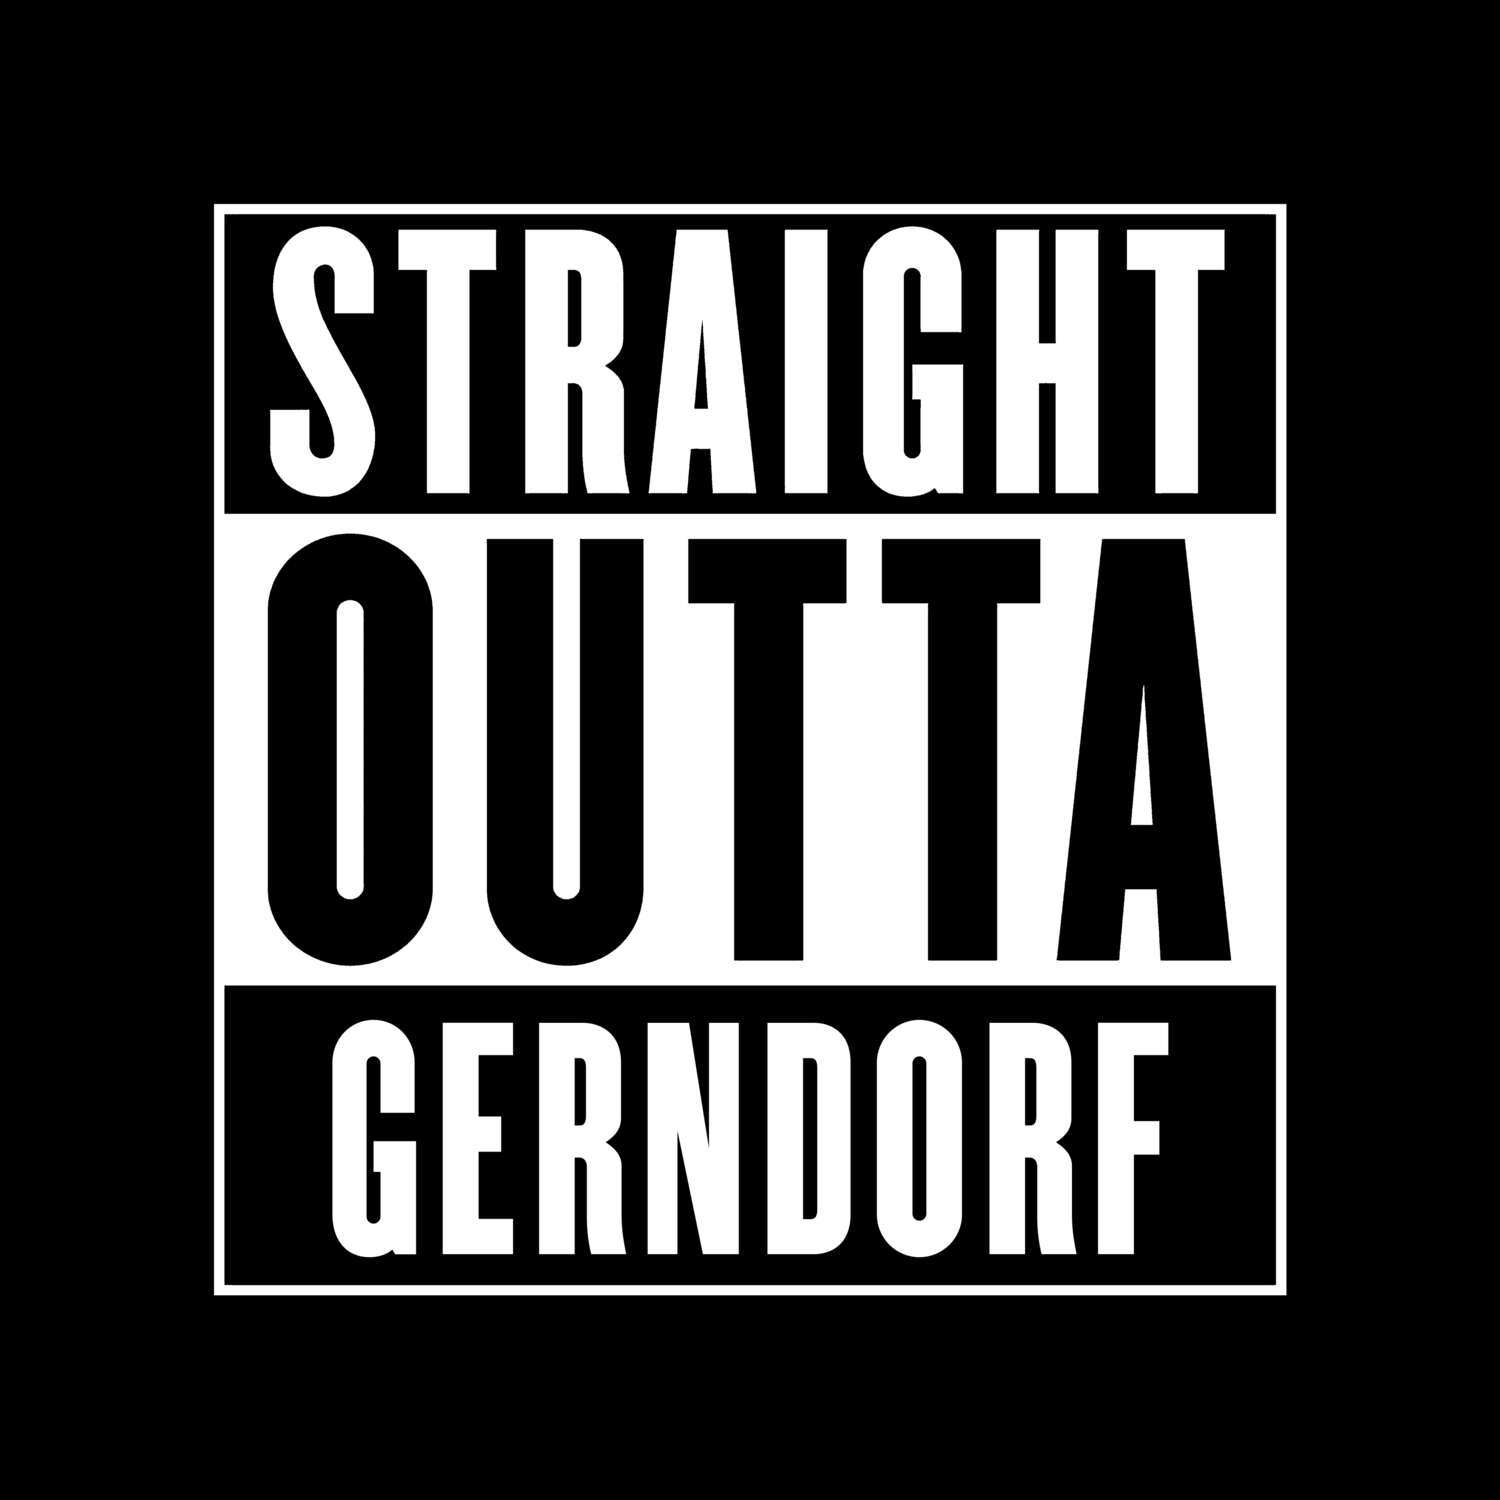 Gerndorf T-Shirt »Straight Outta«